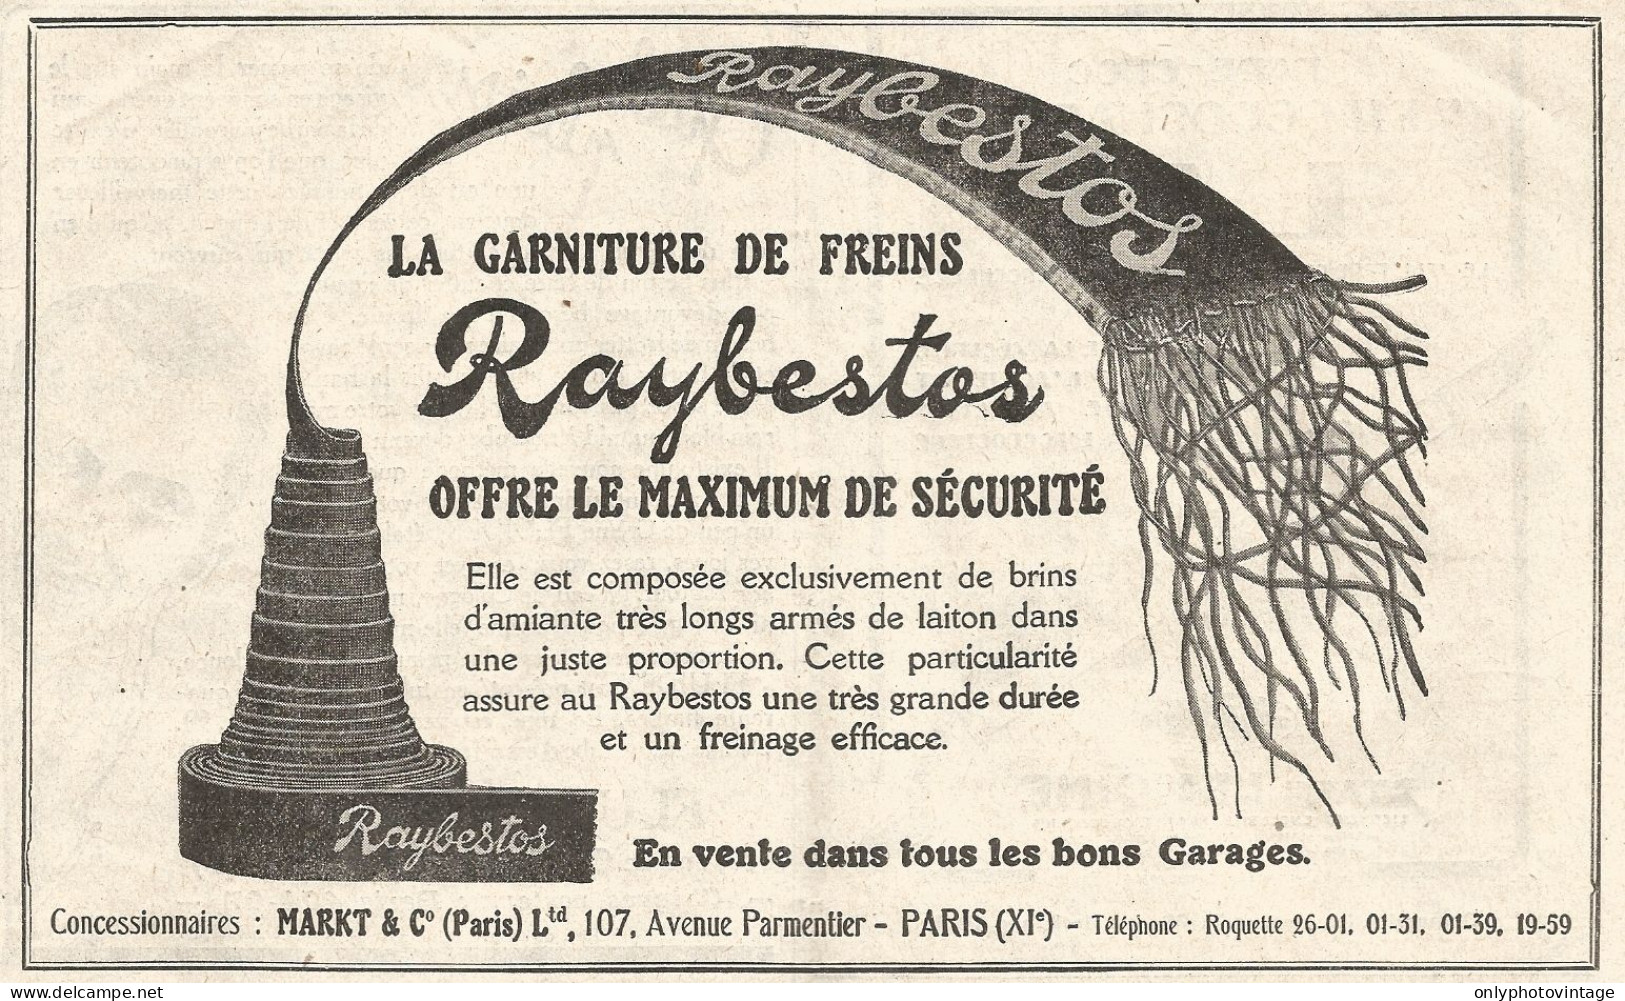 Freni RAYBESTOS - Pubblicitï¿½ Del 1926 - Old Advertising - Advertising